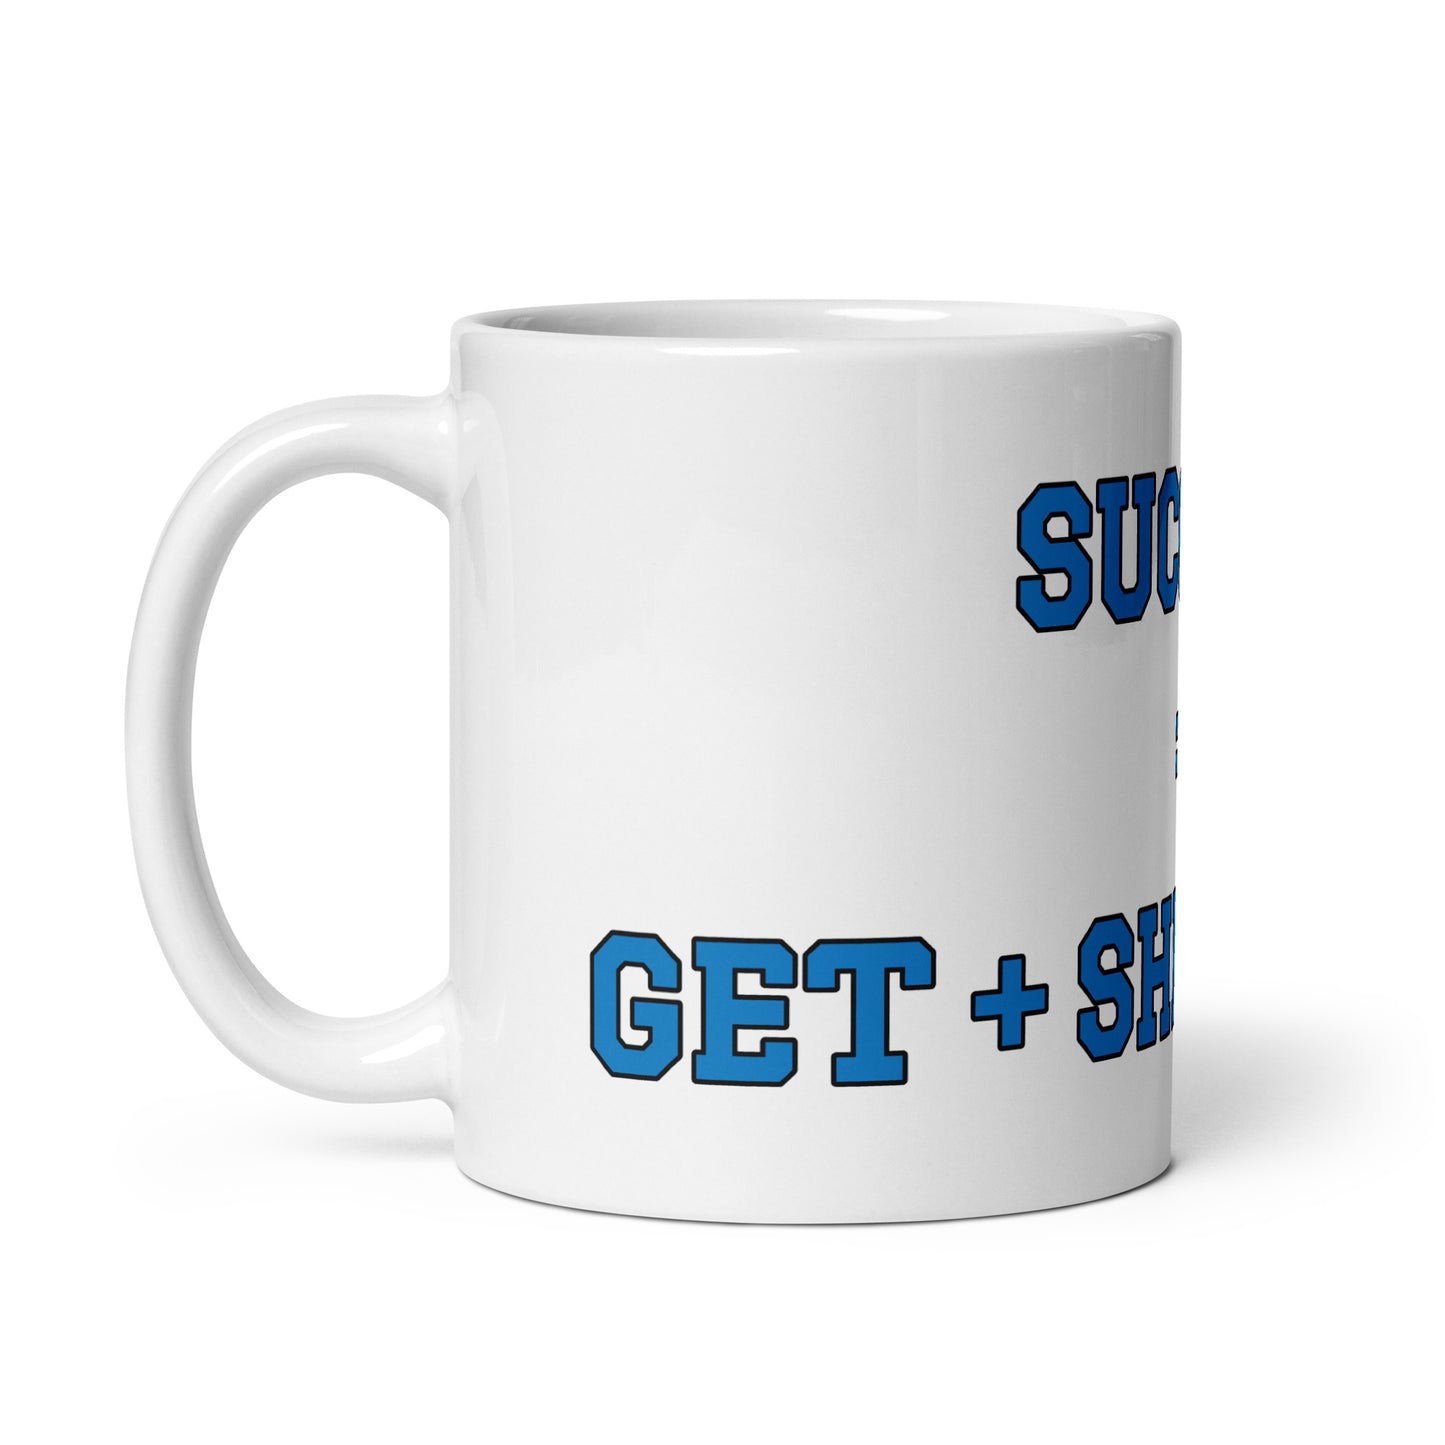 SUCCESS = GET + SHIT + DONE! White glossy mug